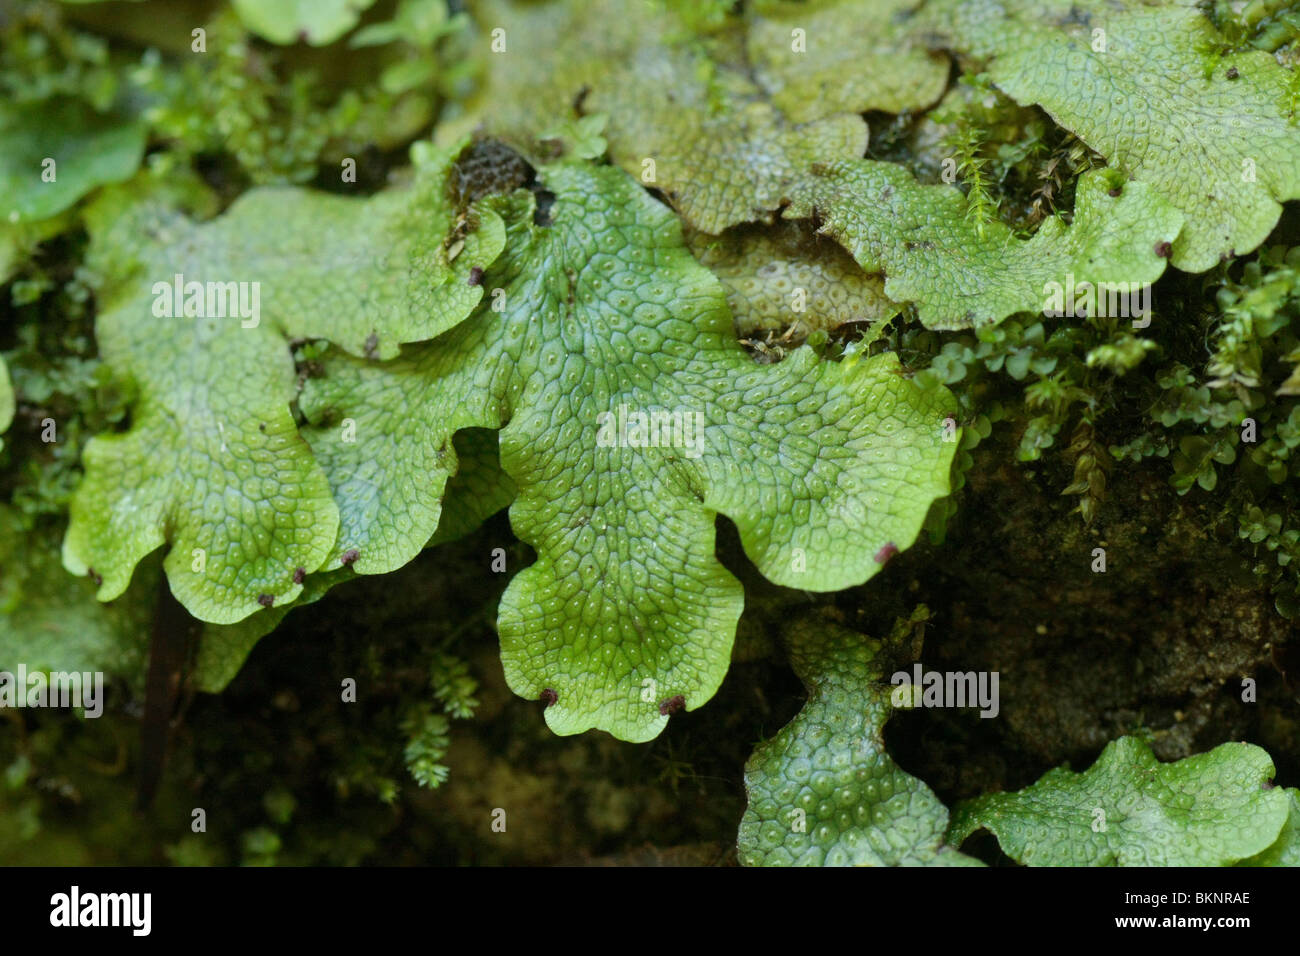 Detailopname van Levermos; Detail of Elegant Bristle-moss Stock Photo